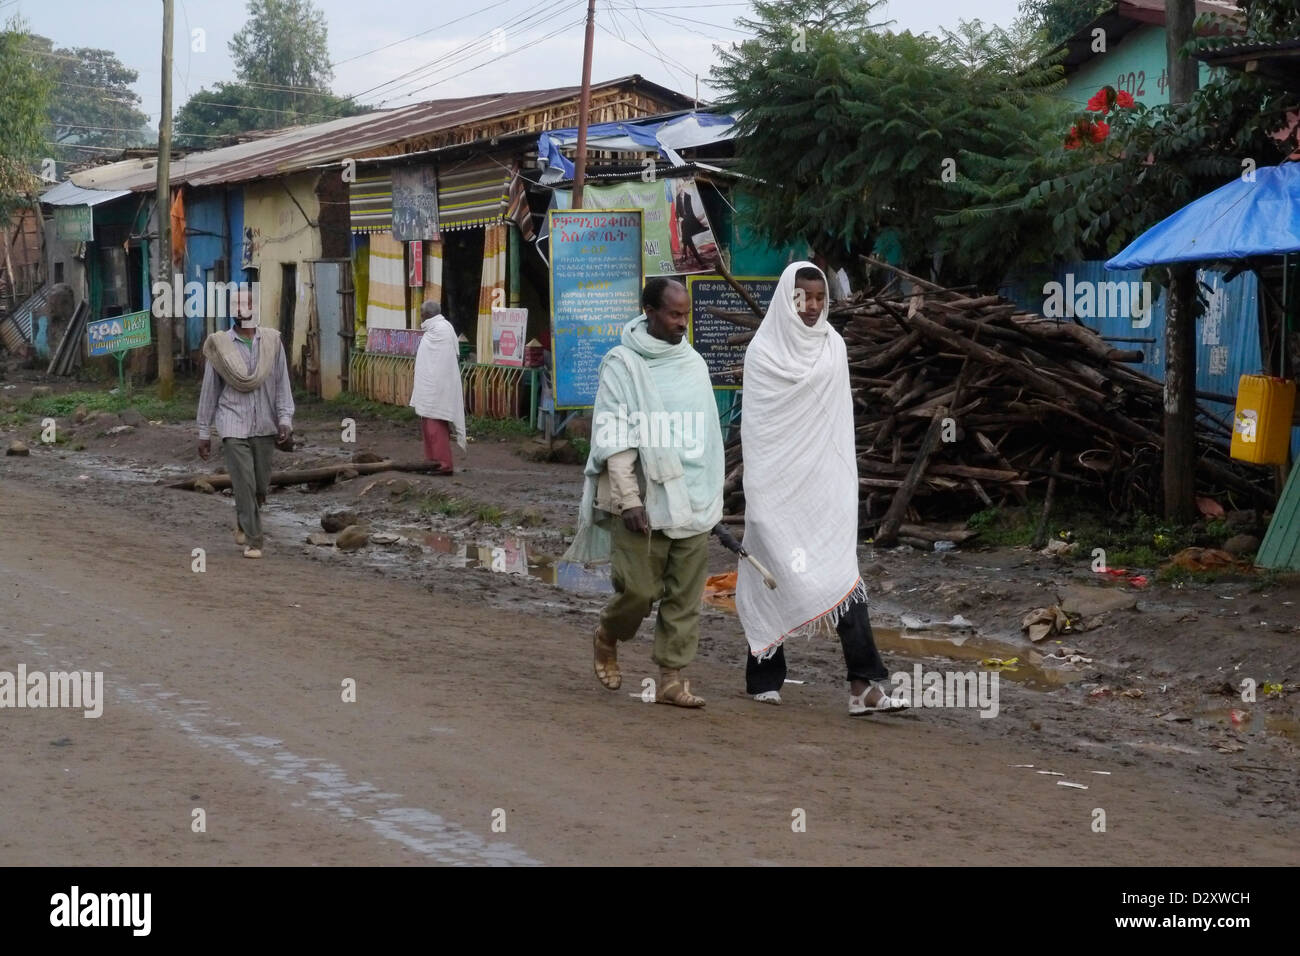 ethiopia street scenes rainy day chagni beni shangul gumuz region 2012 federal democratic republic horn africa Stock Photo